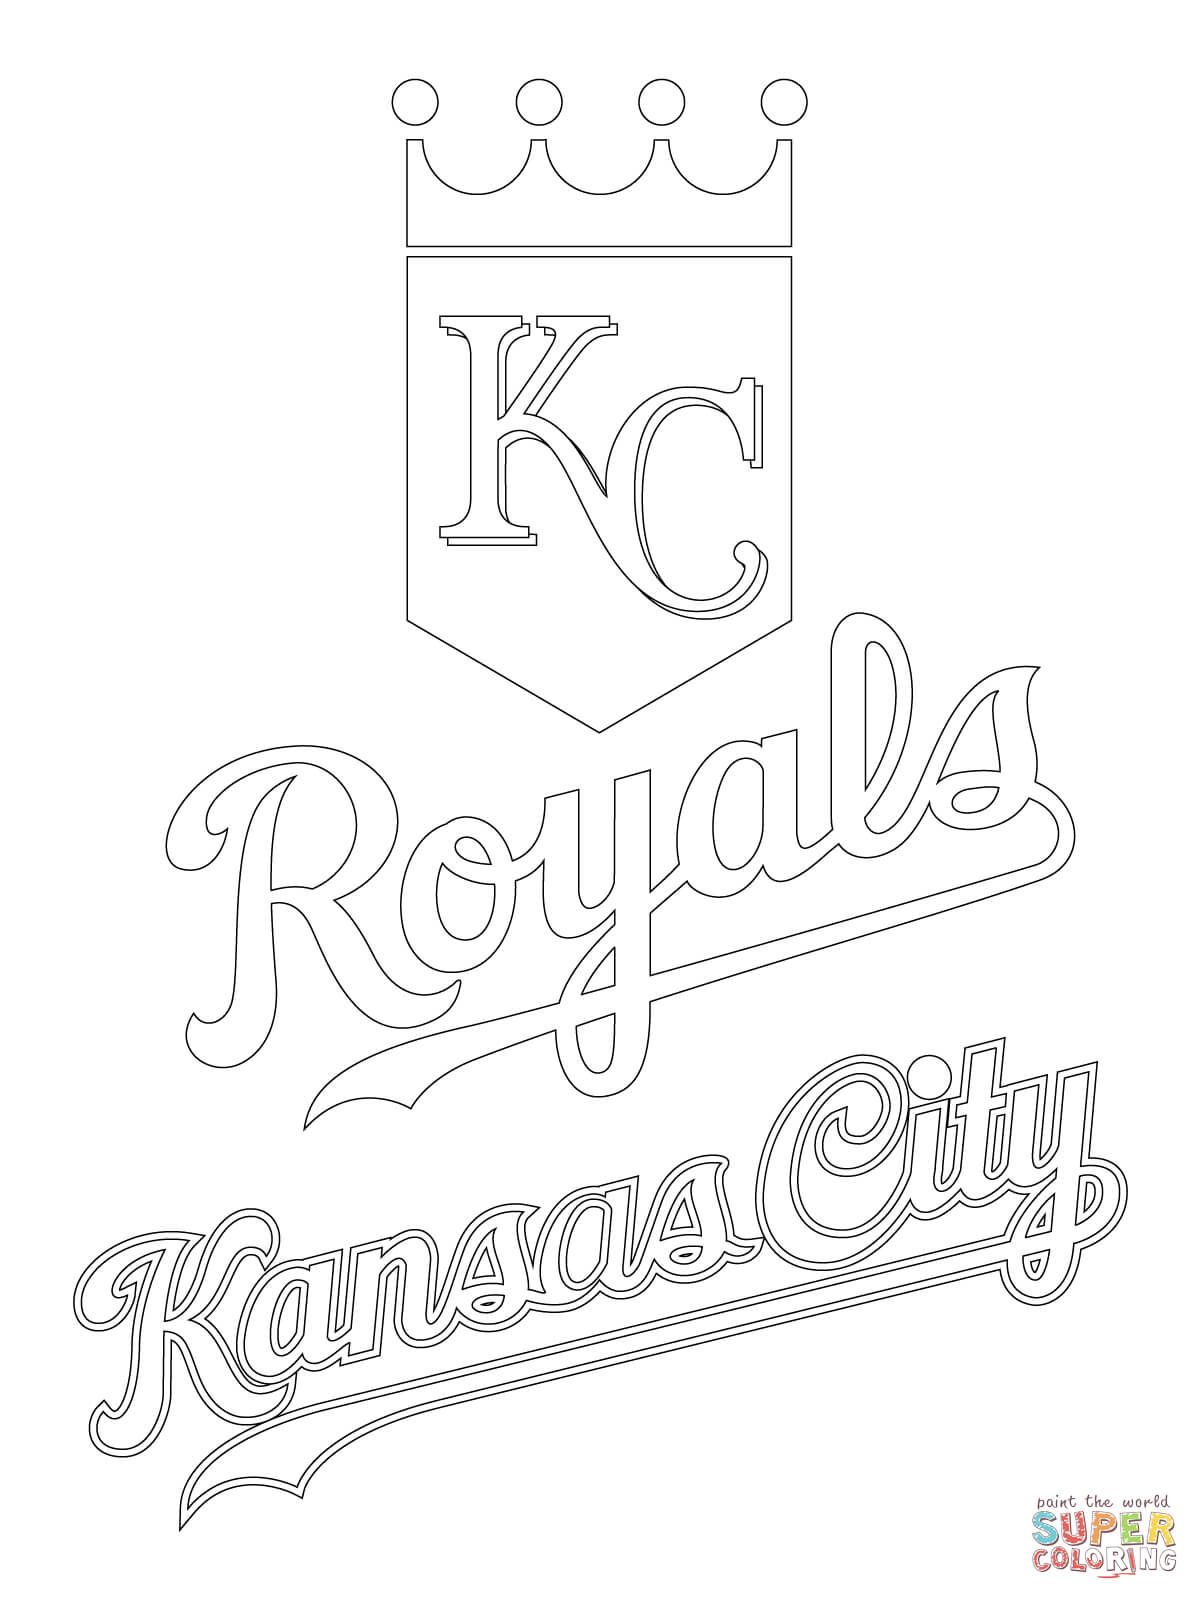 Kansas city royals logo coloring page free printable coloring pages